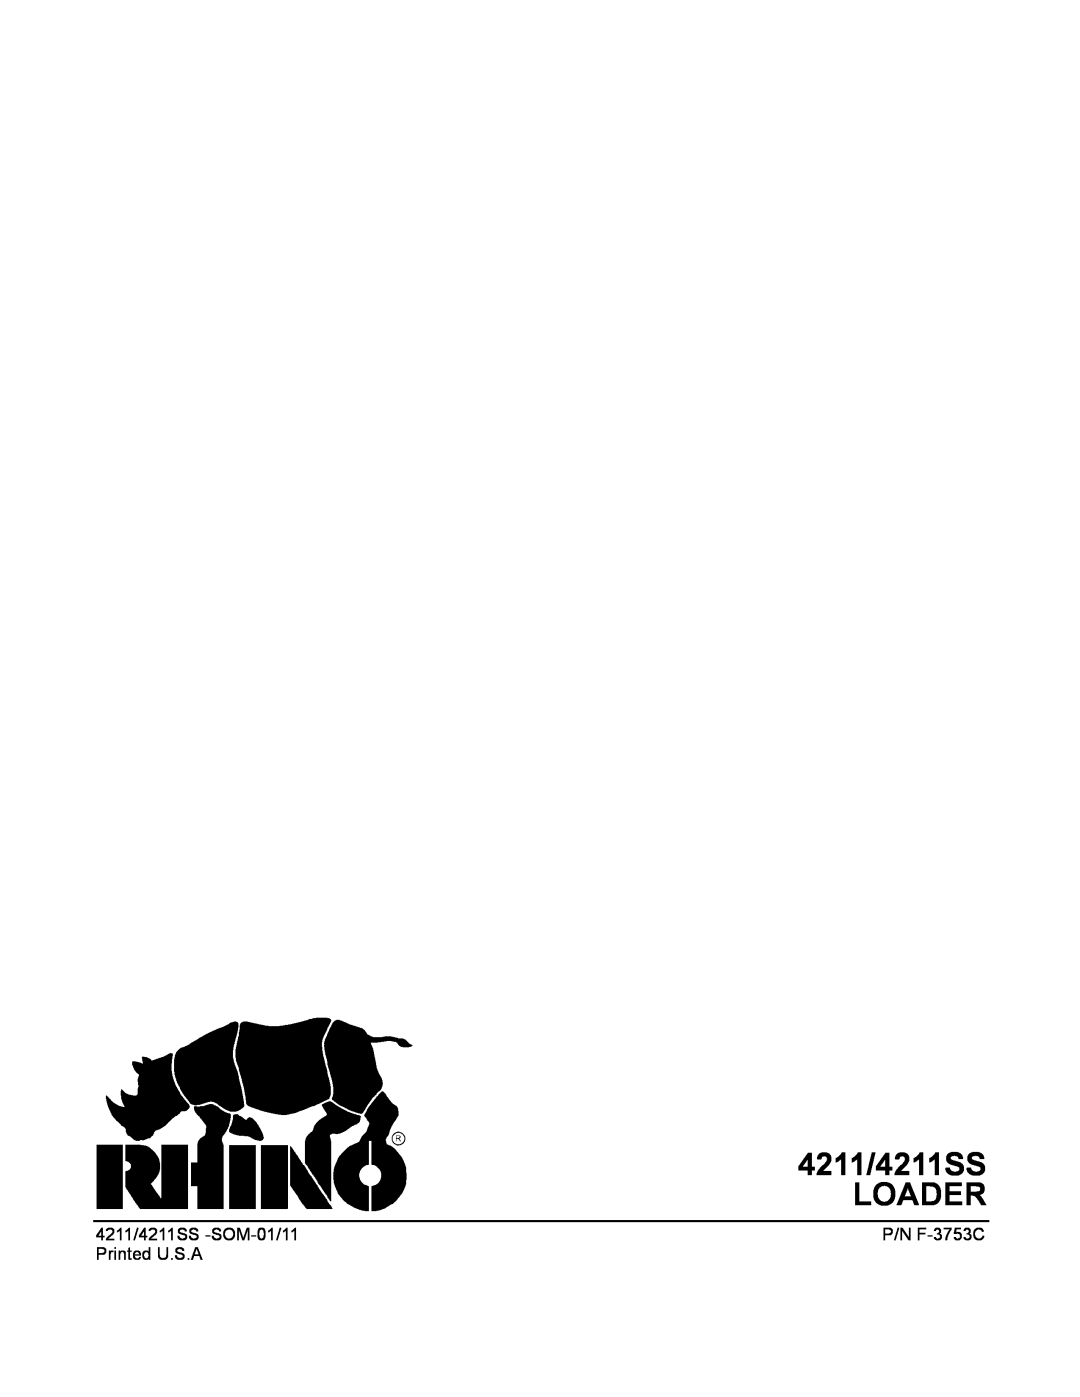 Servis-Rhino manual 4211/4211SS LOADER, 4211/4211SS -SOM-01/11, P/N F-3753C, Printed U.S.A 